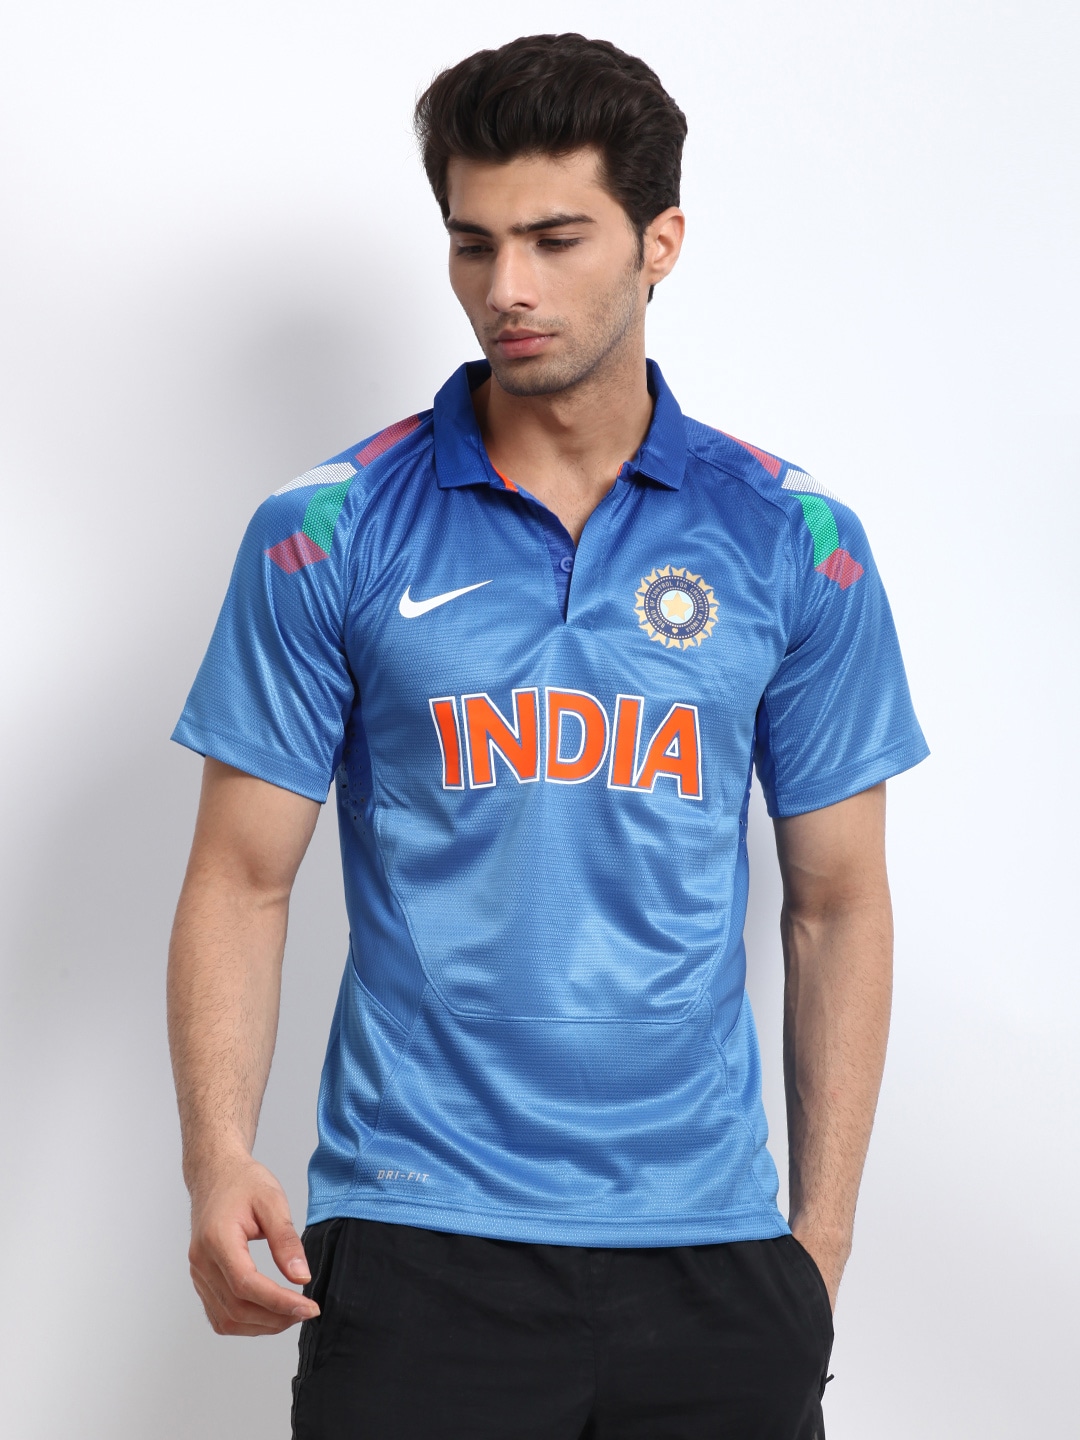 india cricket jersey price